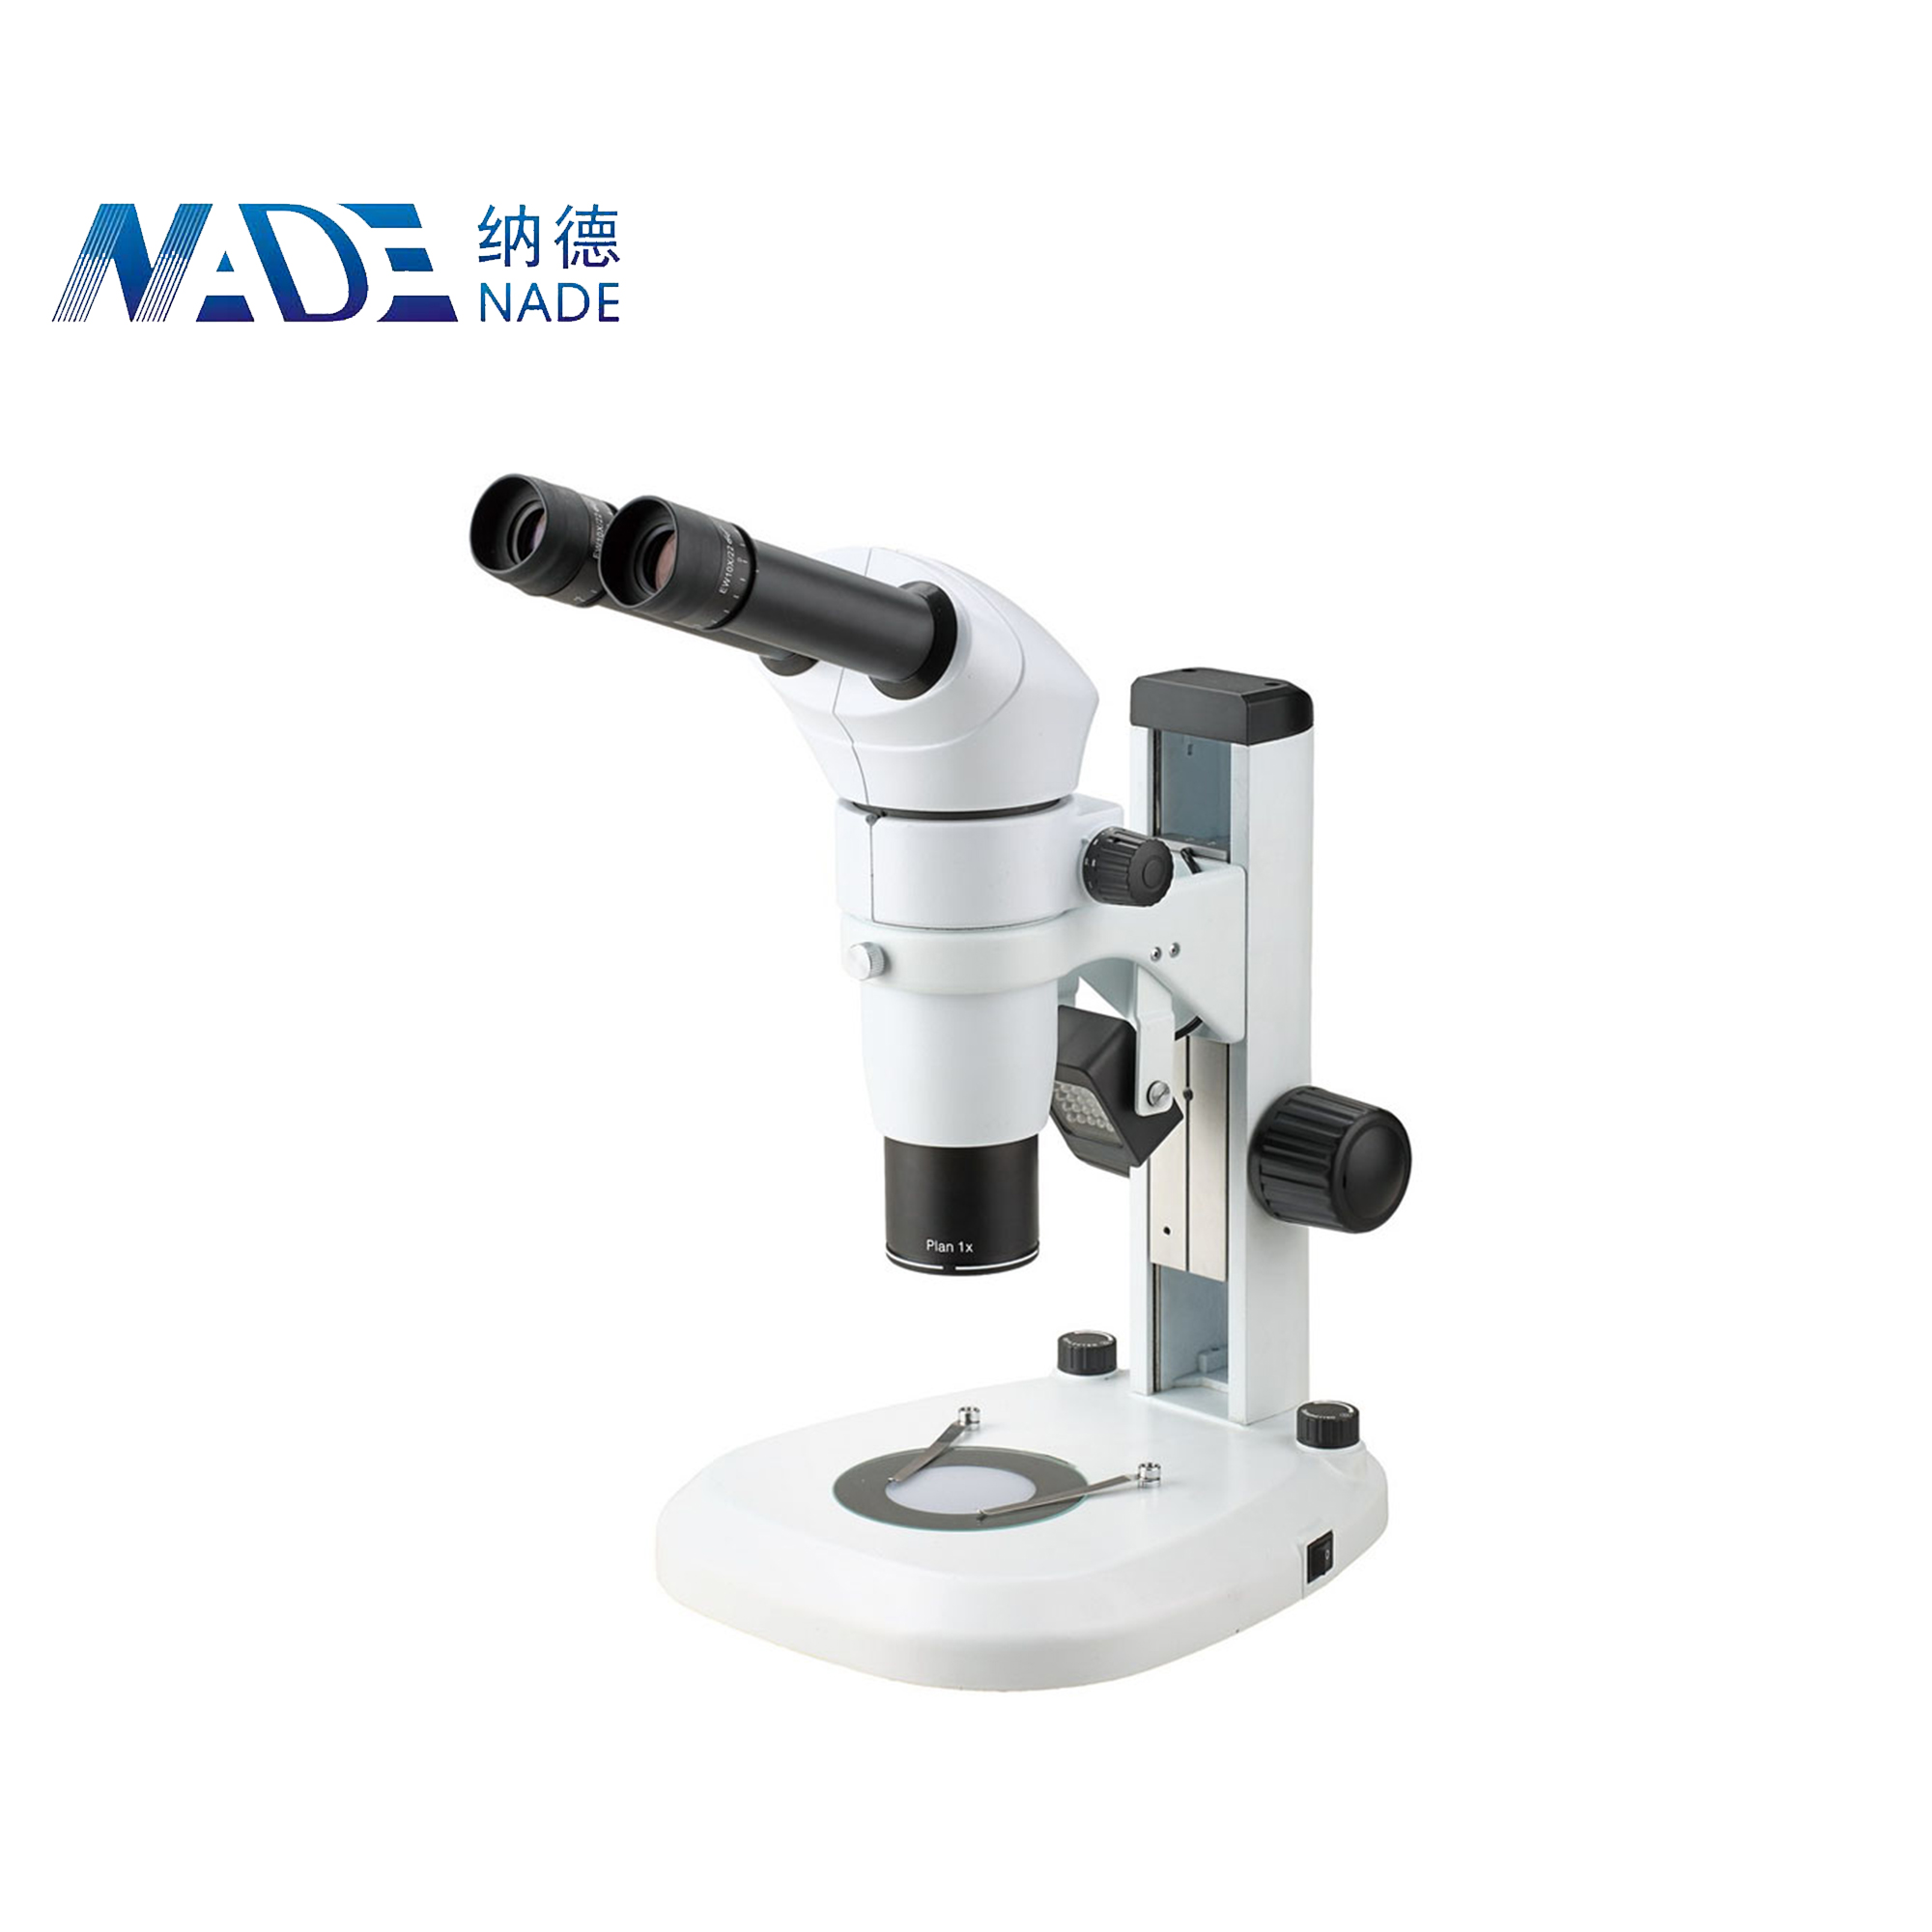 Nade NSZ-806 Laboratory Stereo Binocular Head Microscope usb digital microscope